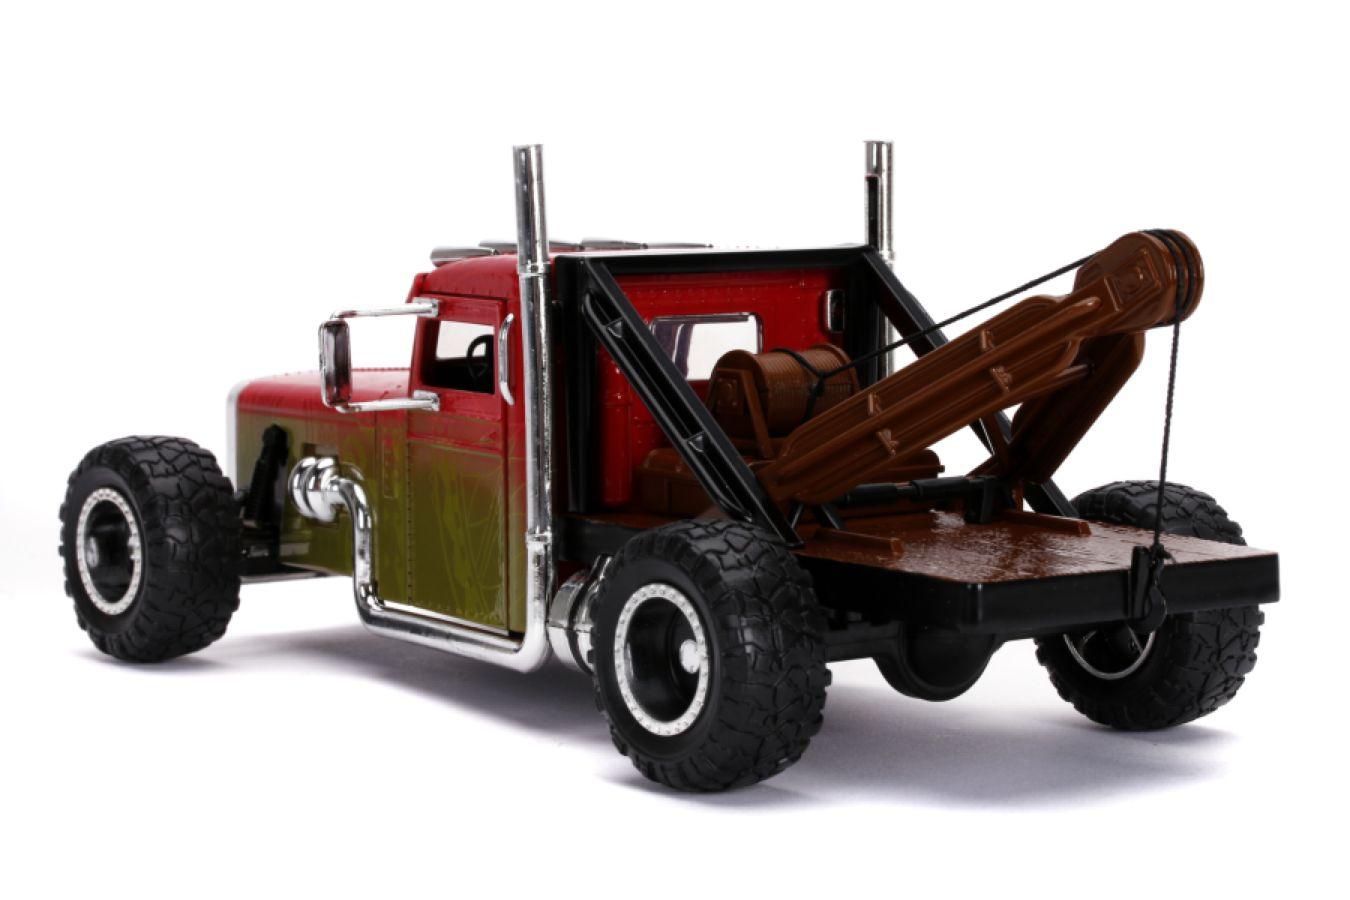 JAD32089 Fast and Furious - Hobbs & Shaw Custom Truck 1:24 Scale Hollywood Ride - Jada Toys - Titan Pop Culture